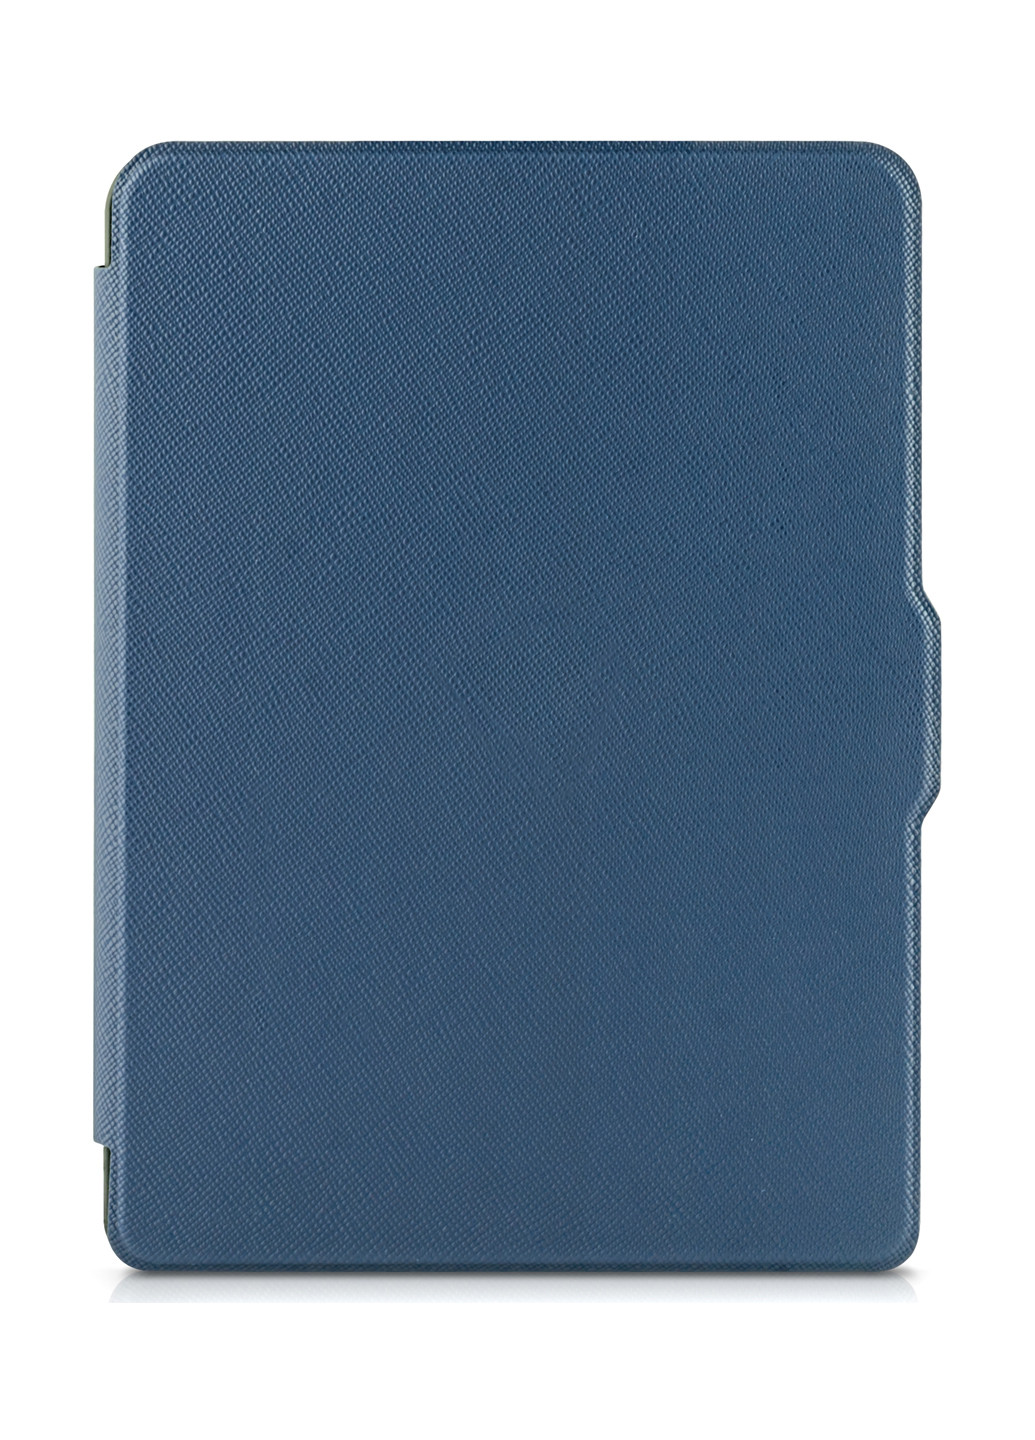 Электронная книга AirBook сity led + чехол premium blue (150528702)